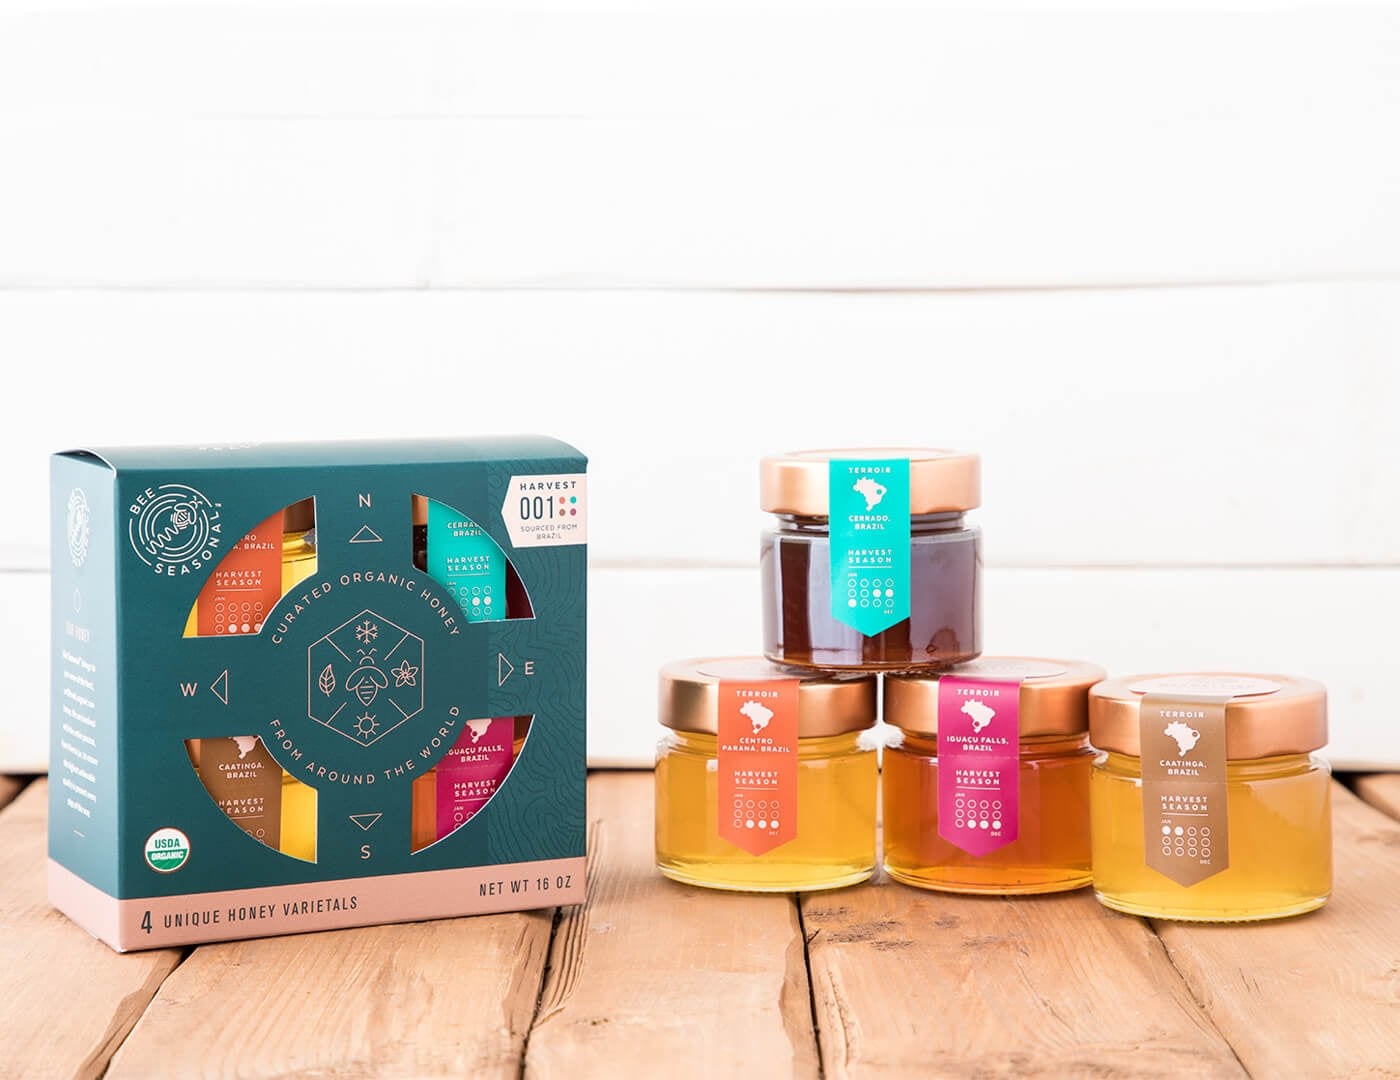 Raw honey varietal set of four jars showing jars and packaging